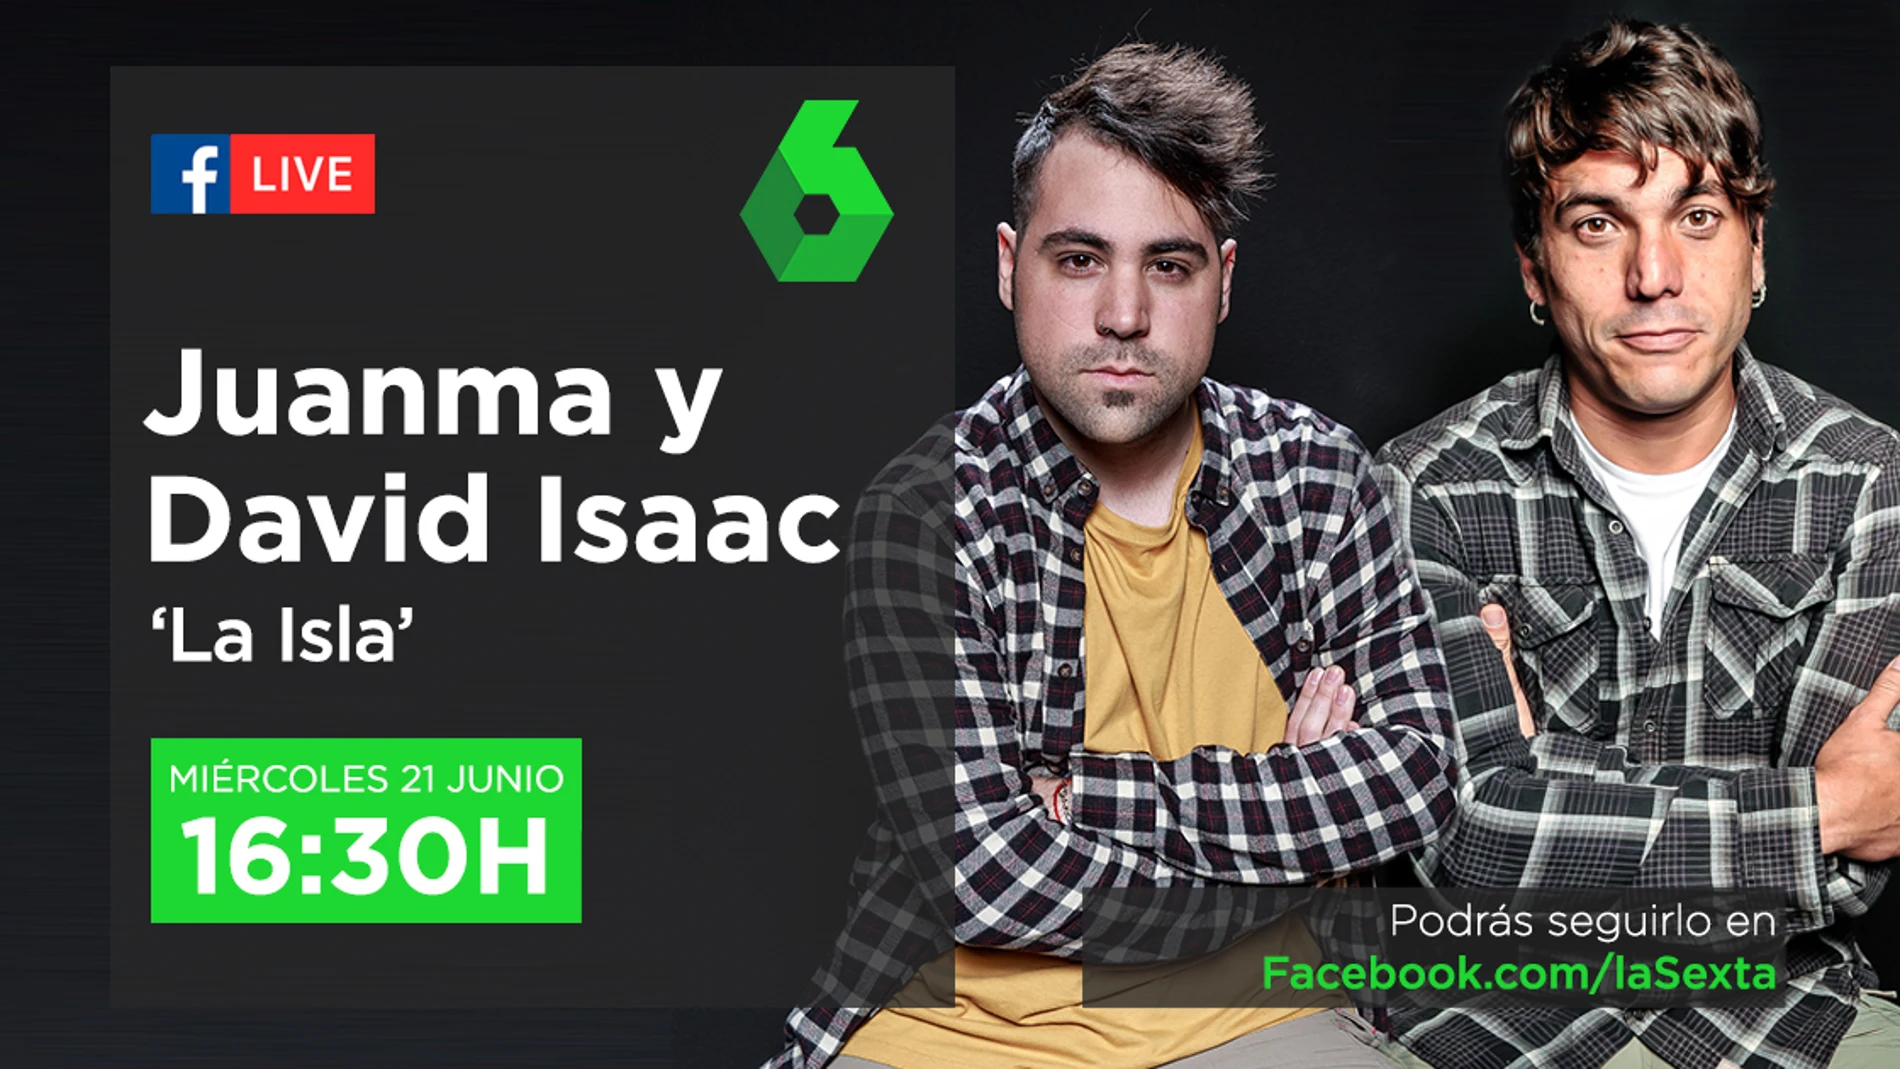 Facebook Live - Juanma y David Isaac